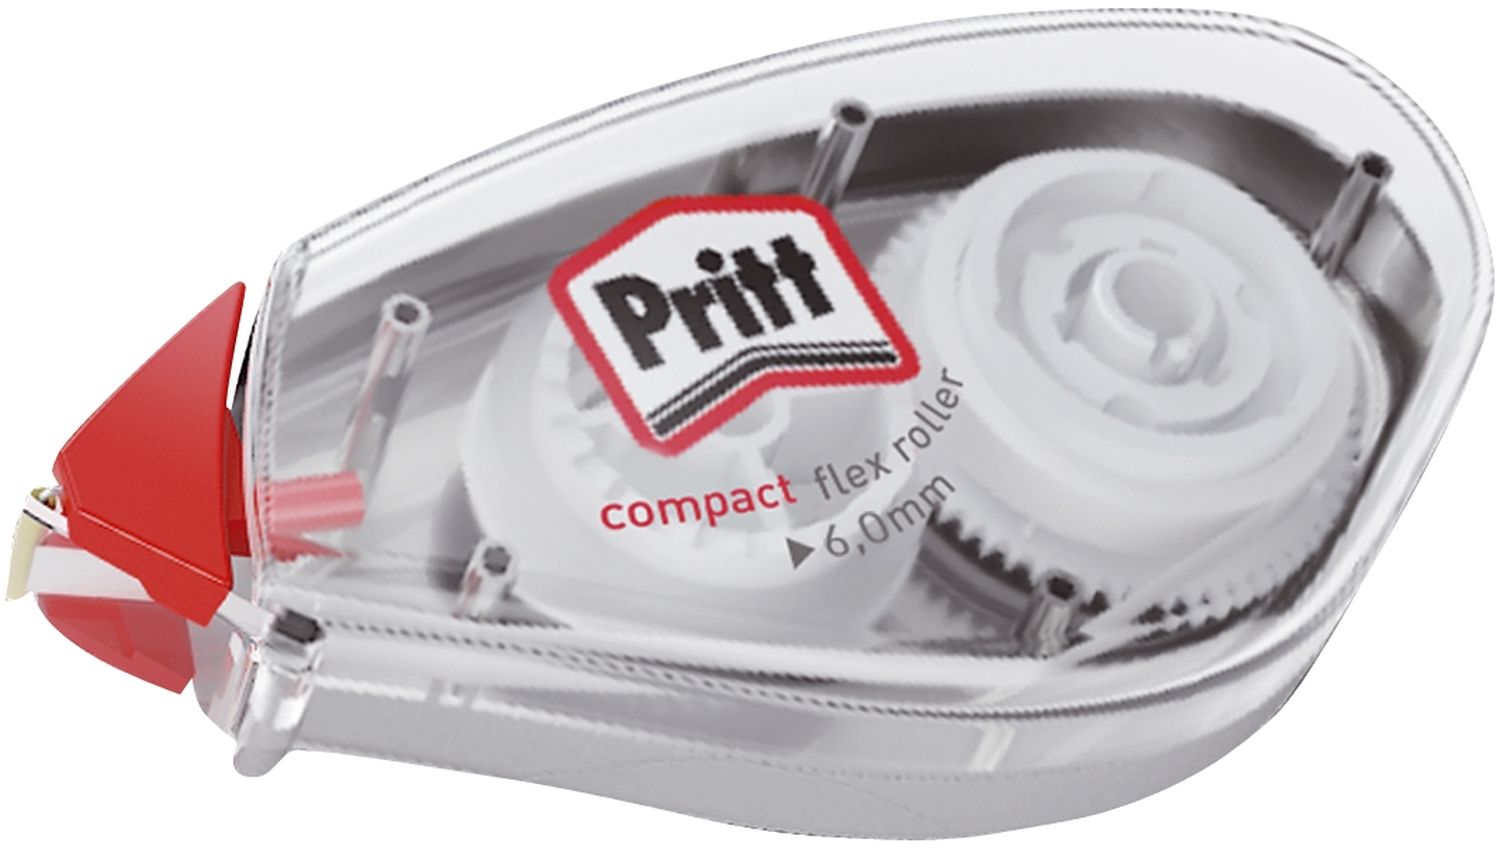 Korrekturroller Pritt Compact Flex 9H PCK6B, Einwegroller, (BxL) 6 mm x 10 m